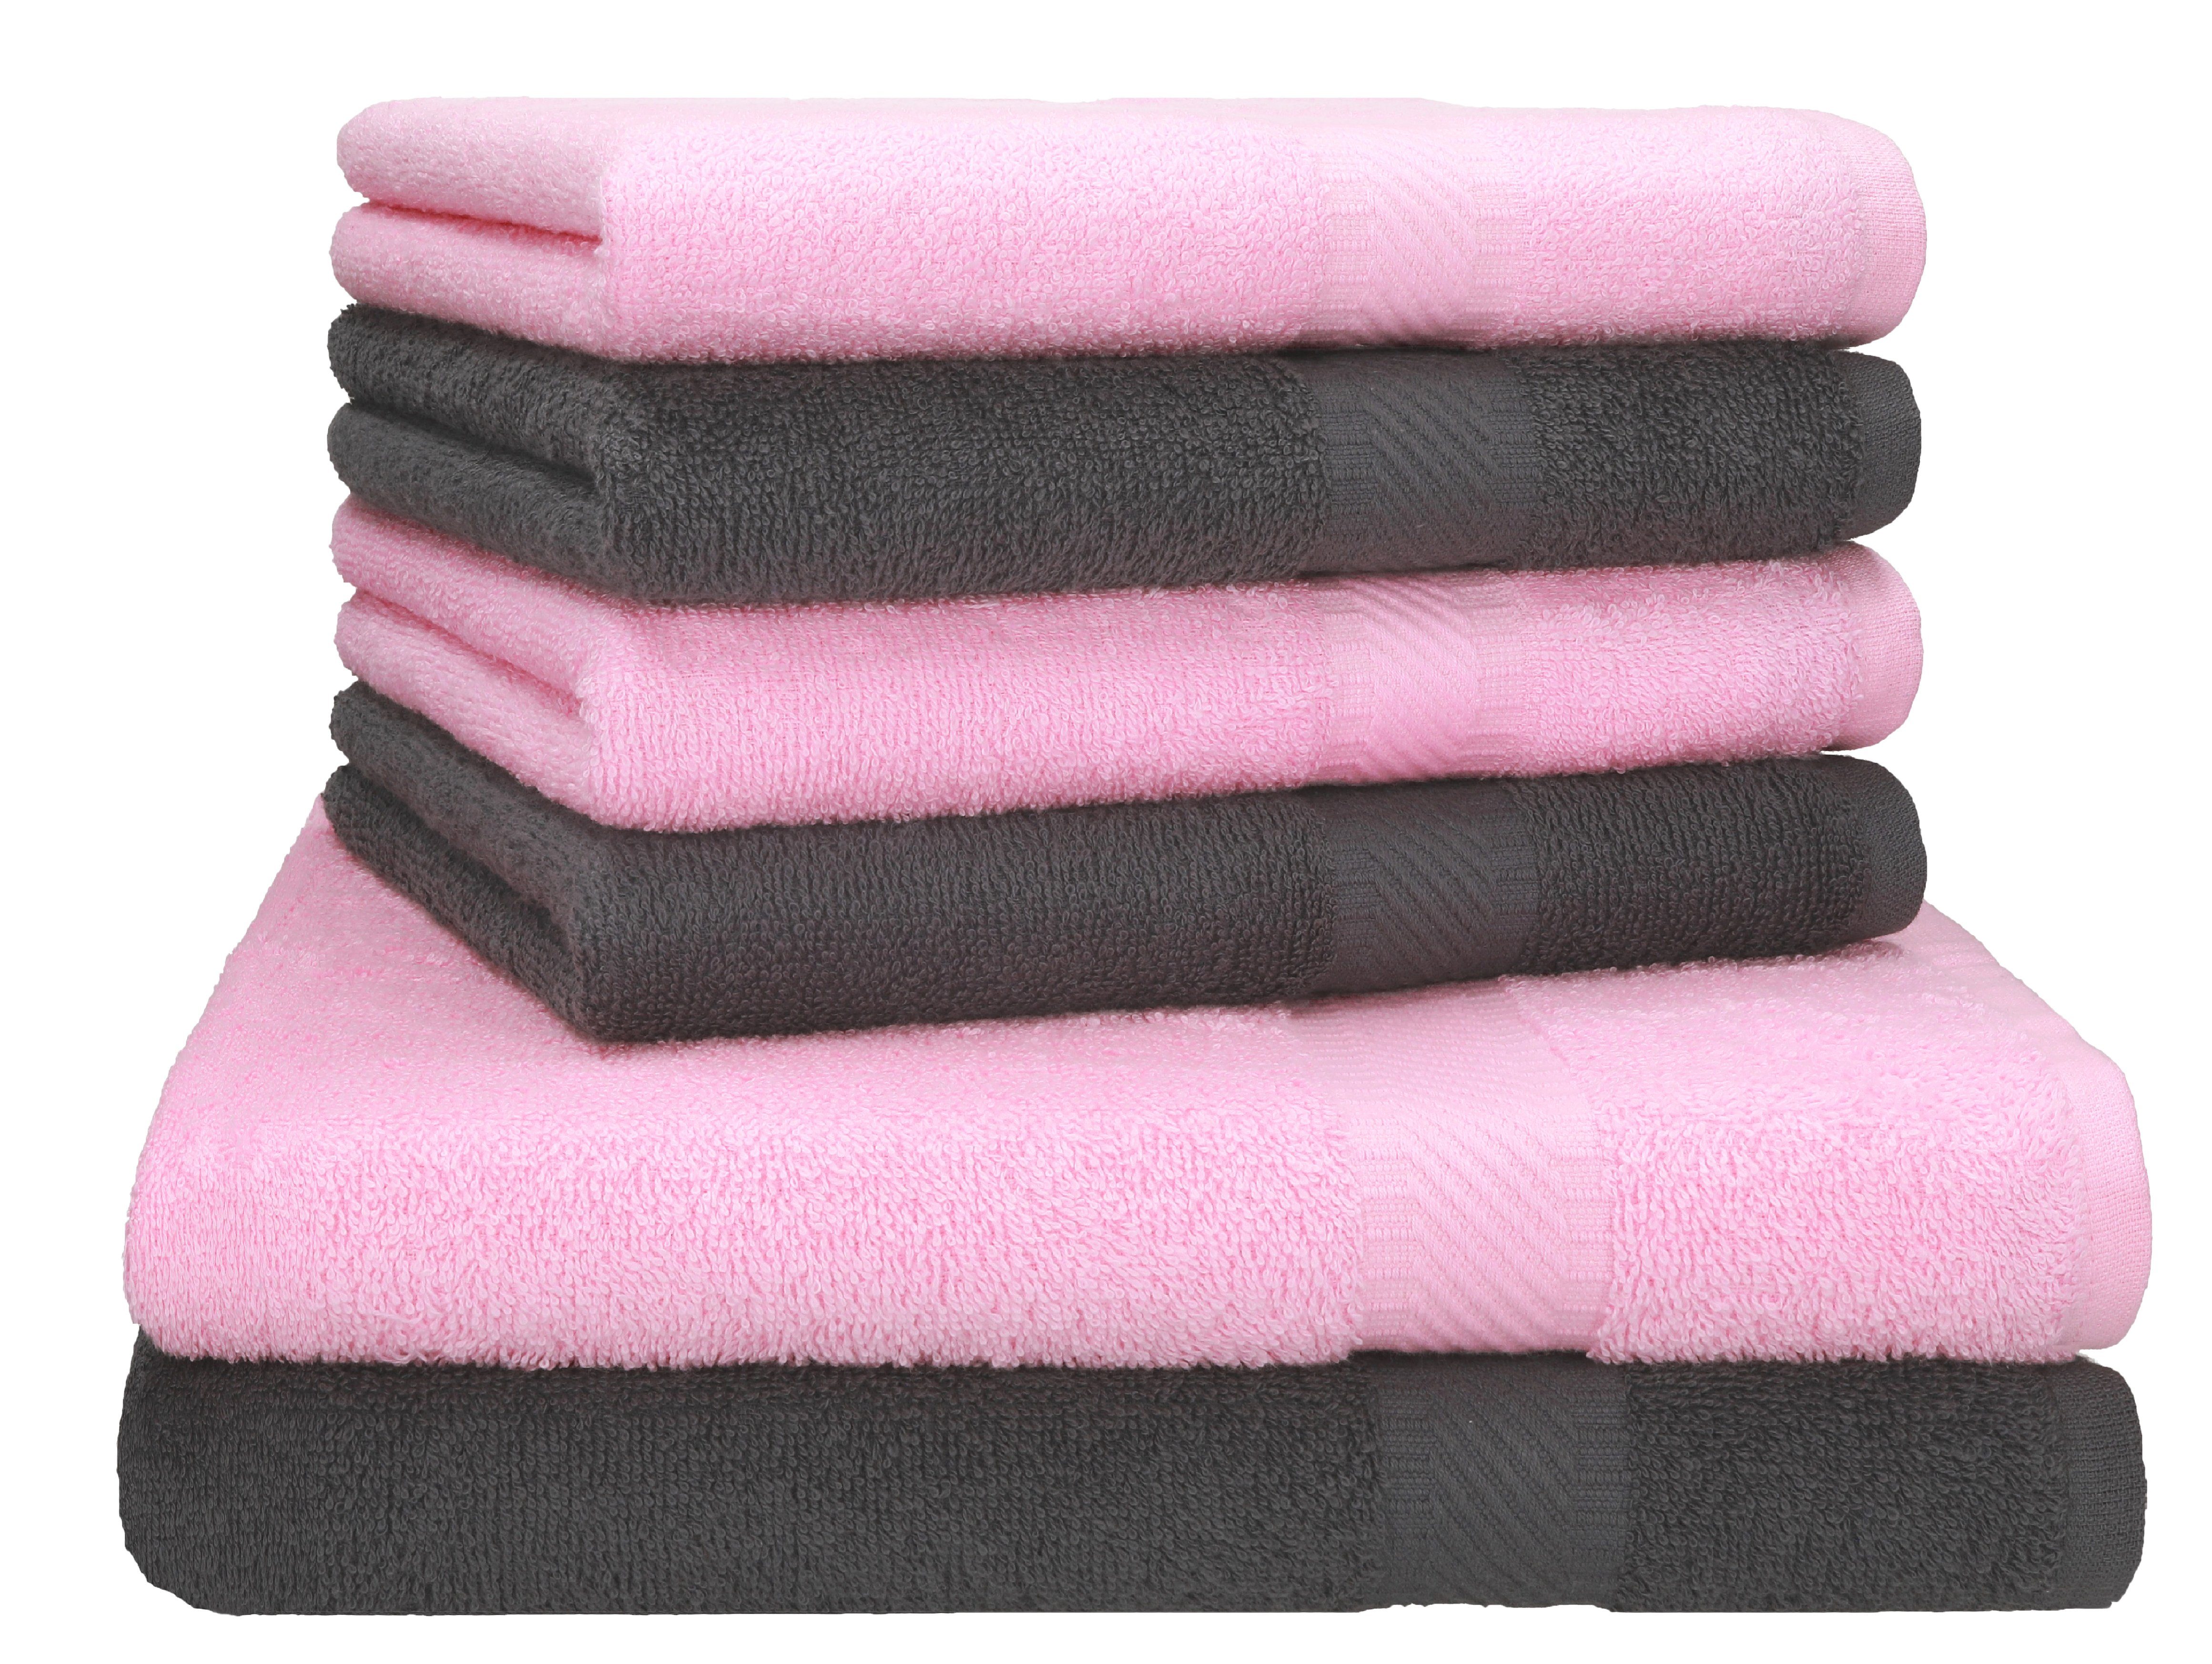 Betz Handtuch Set Palermo 6er 2x Liegetücher 70x140 cm 4x Handtücher, 100% Baumwolle anthrazit/rosé